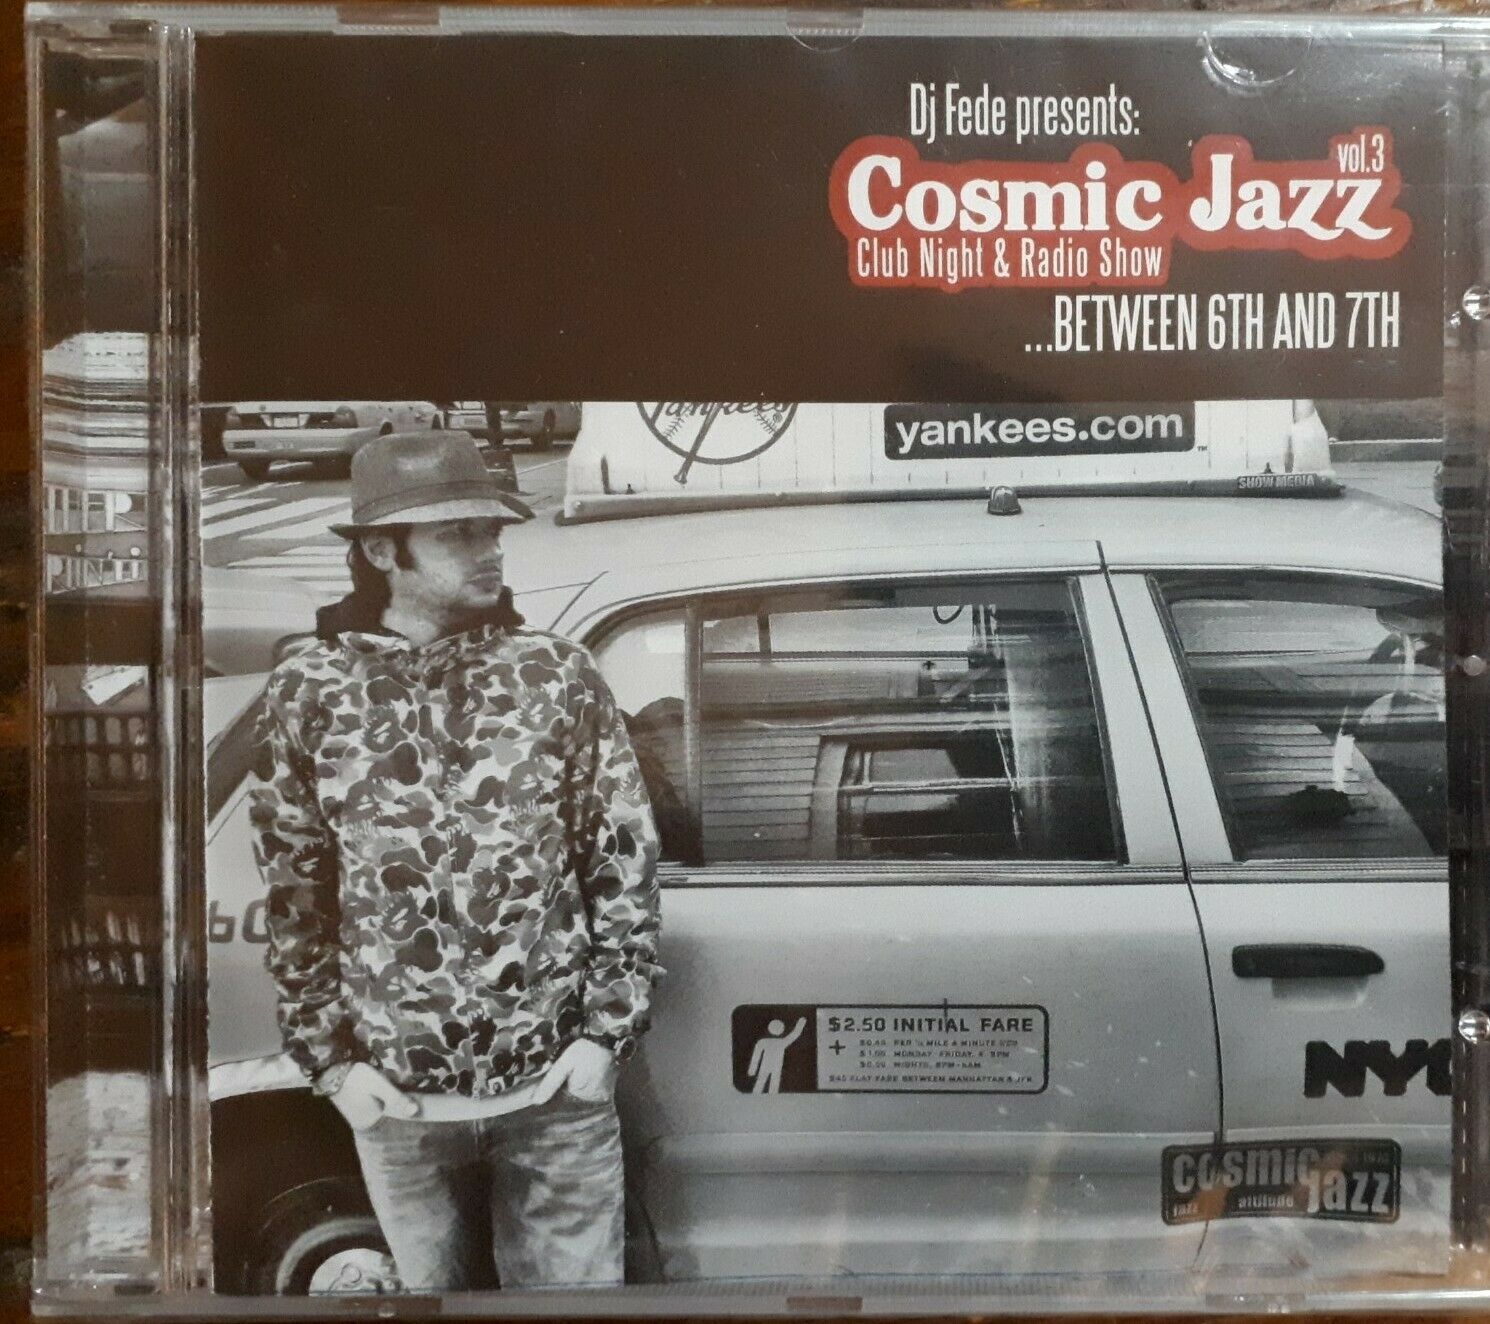 DJ Fede - Presents Cosmic Jazz Vol. 3 Club Night & Radio Show